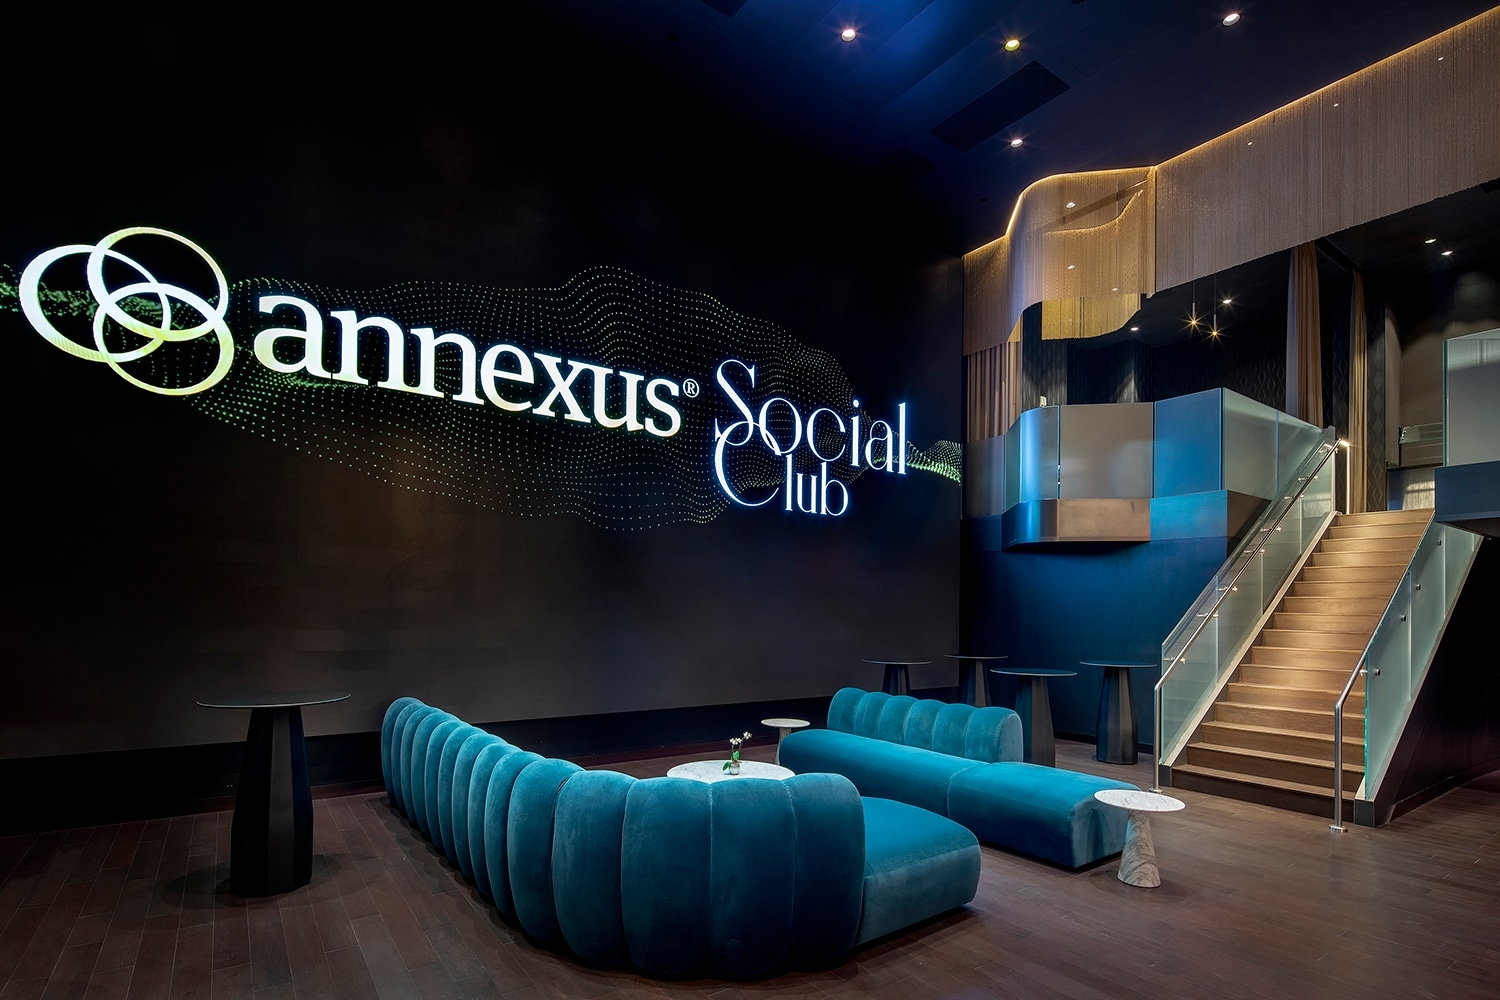 Annexus Social Club Phoenix Suns Partnerhsip